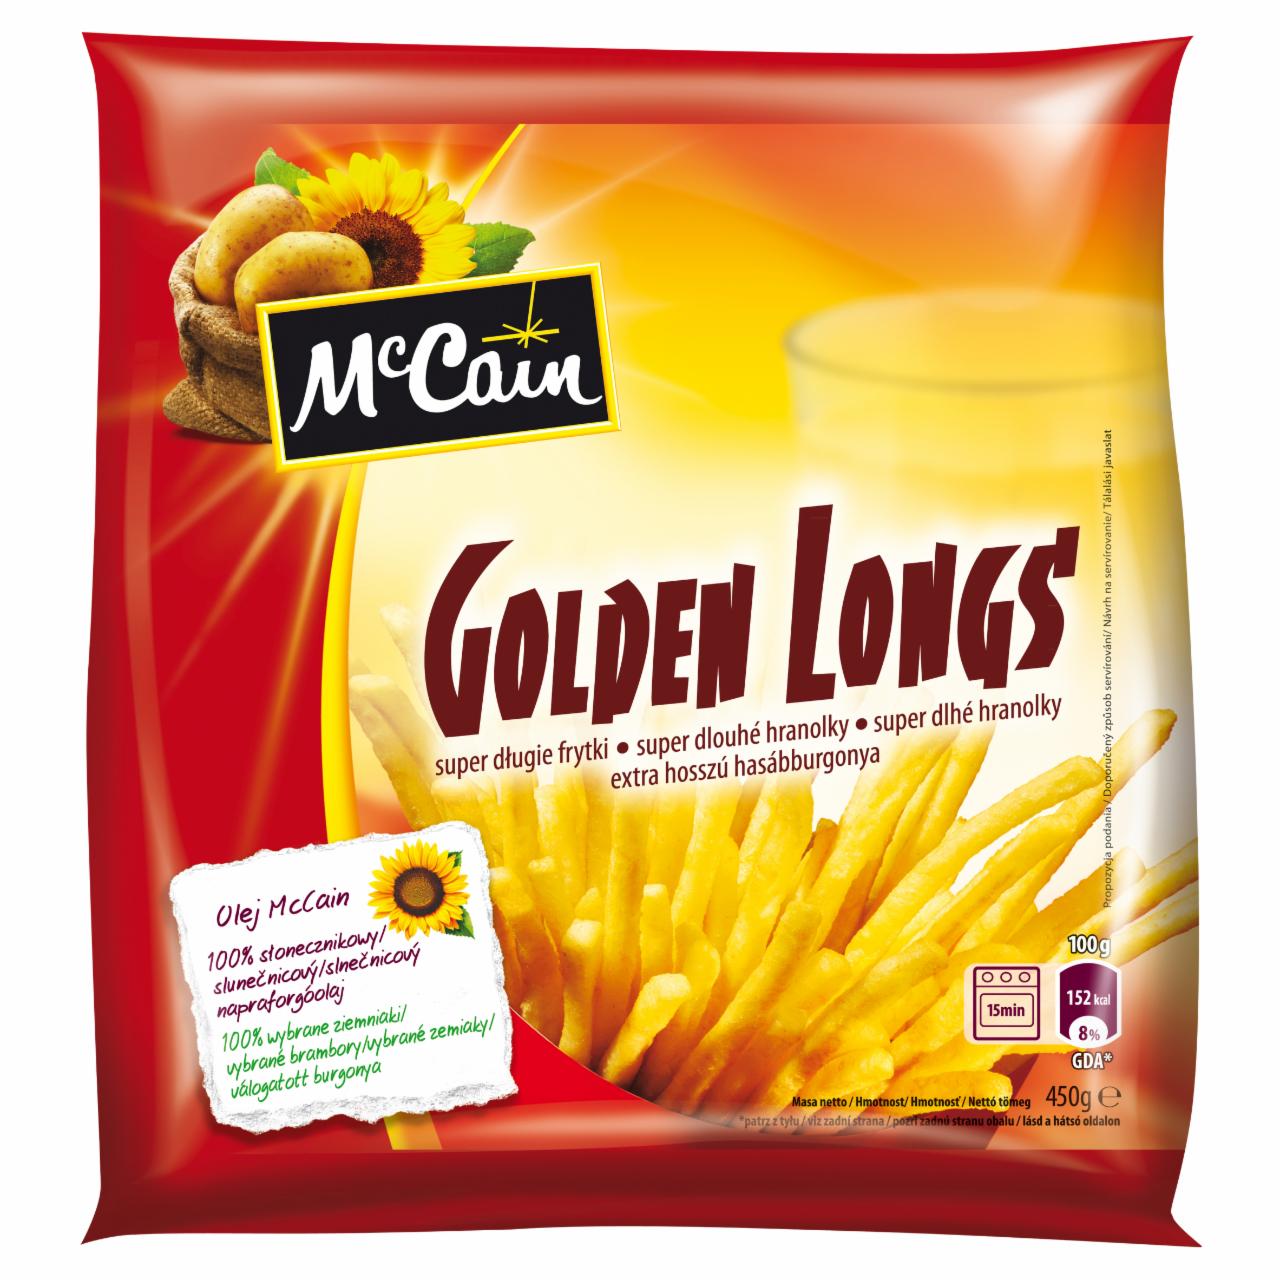 Zdjęcia - McCain Golden Longs Superdługie frytki 450 g